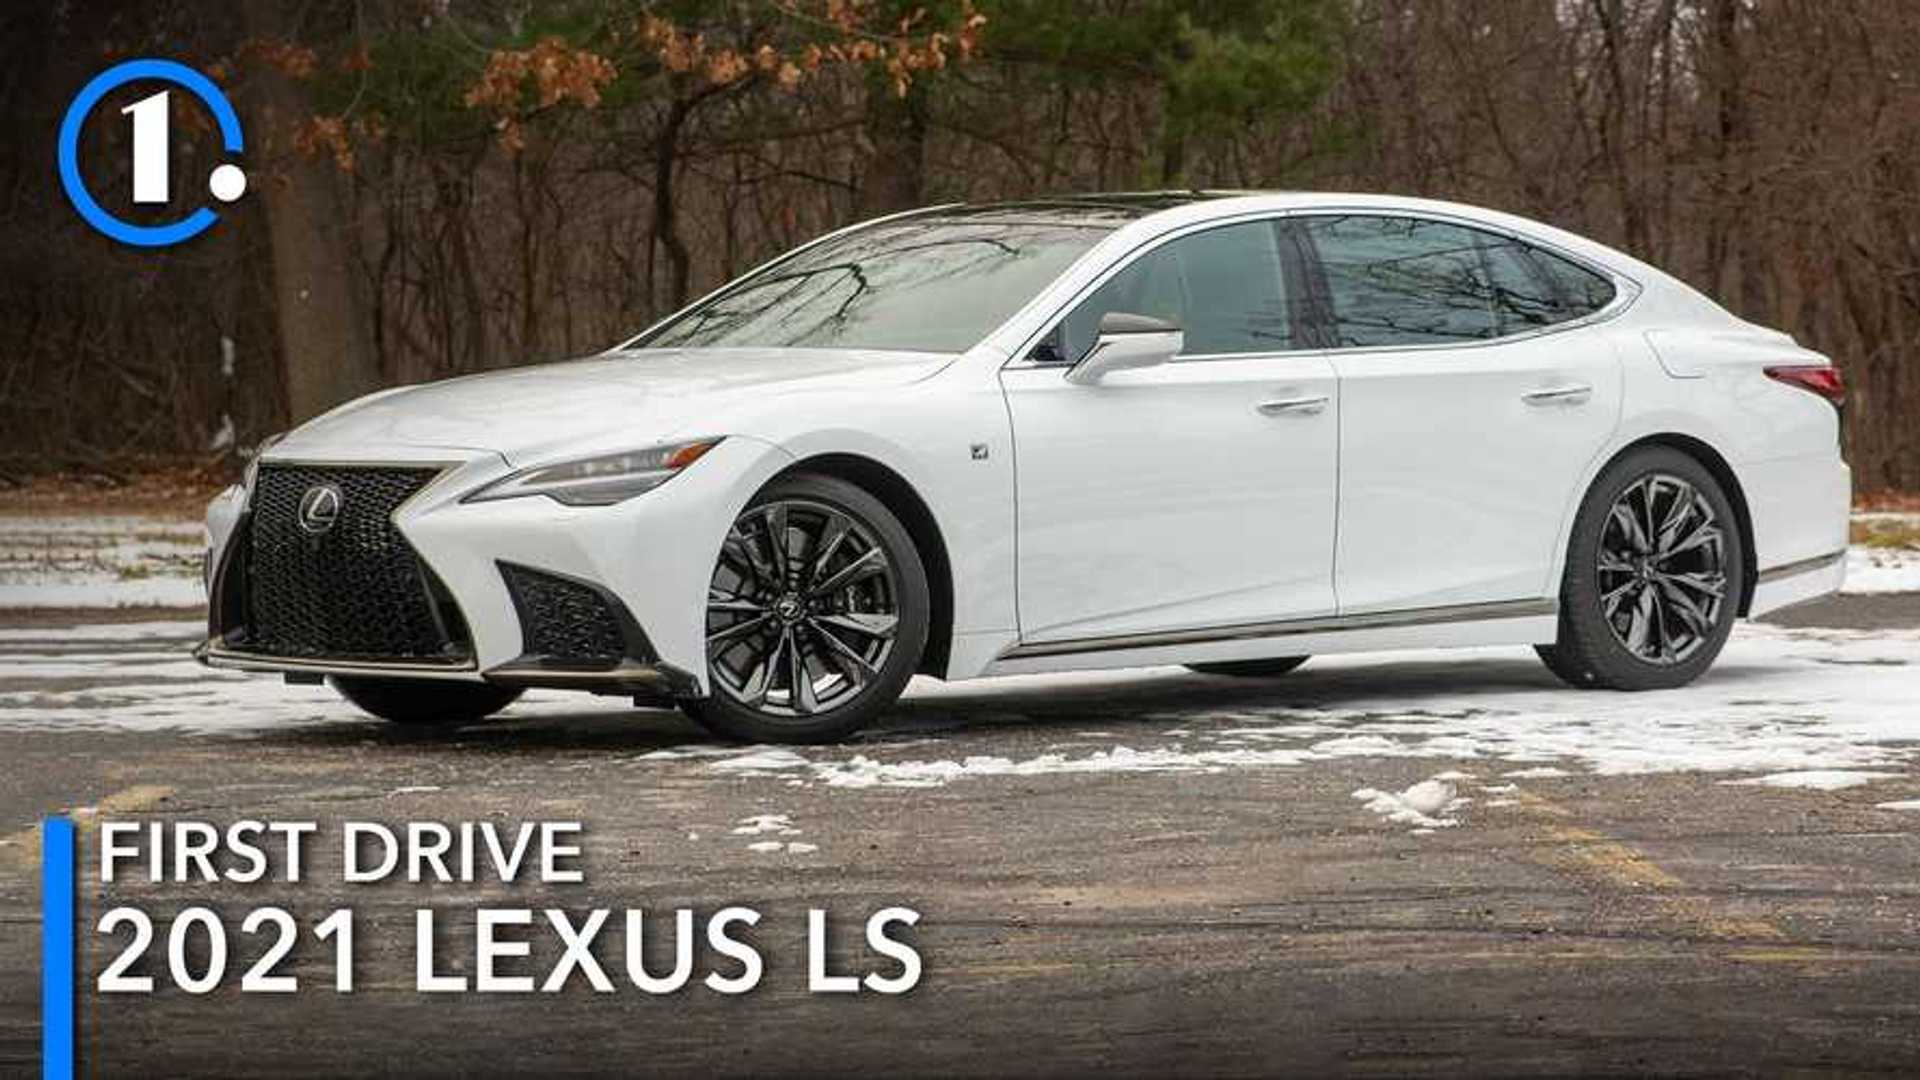 2021 Lexus LS First Drive Review: Odd Priorities